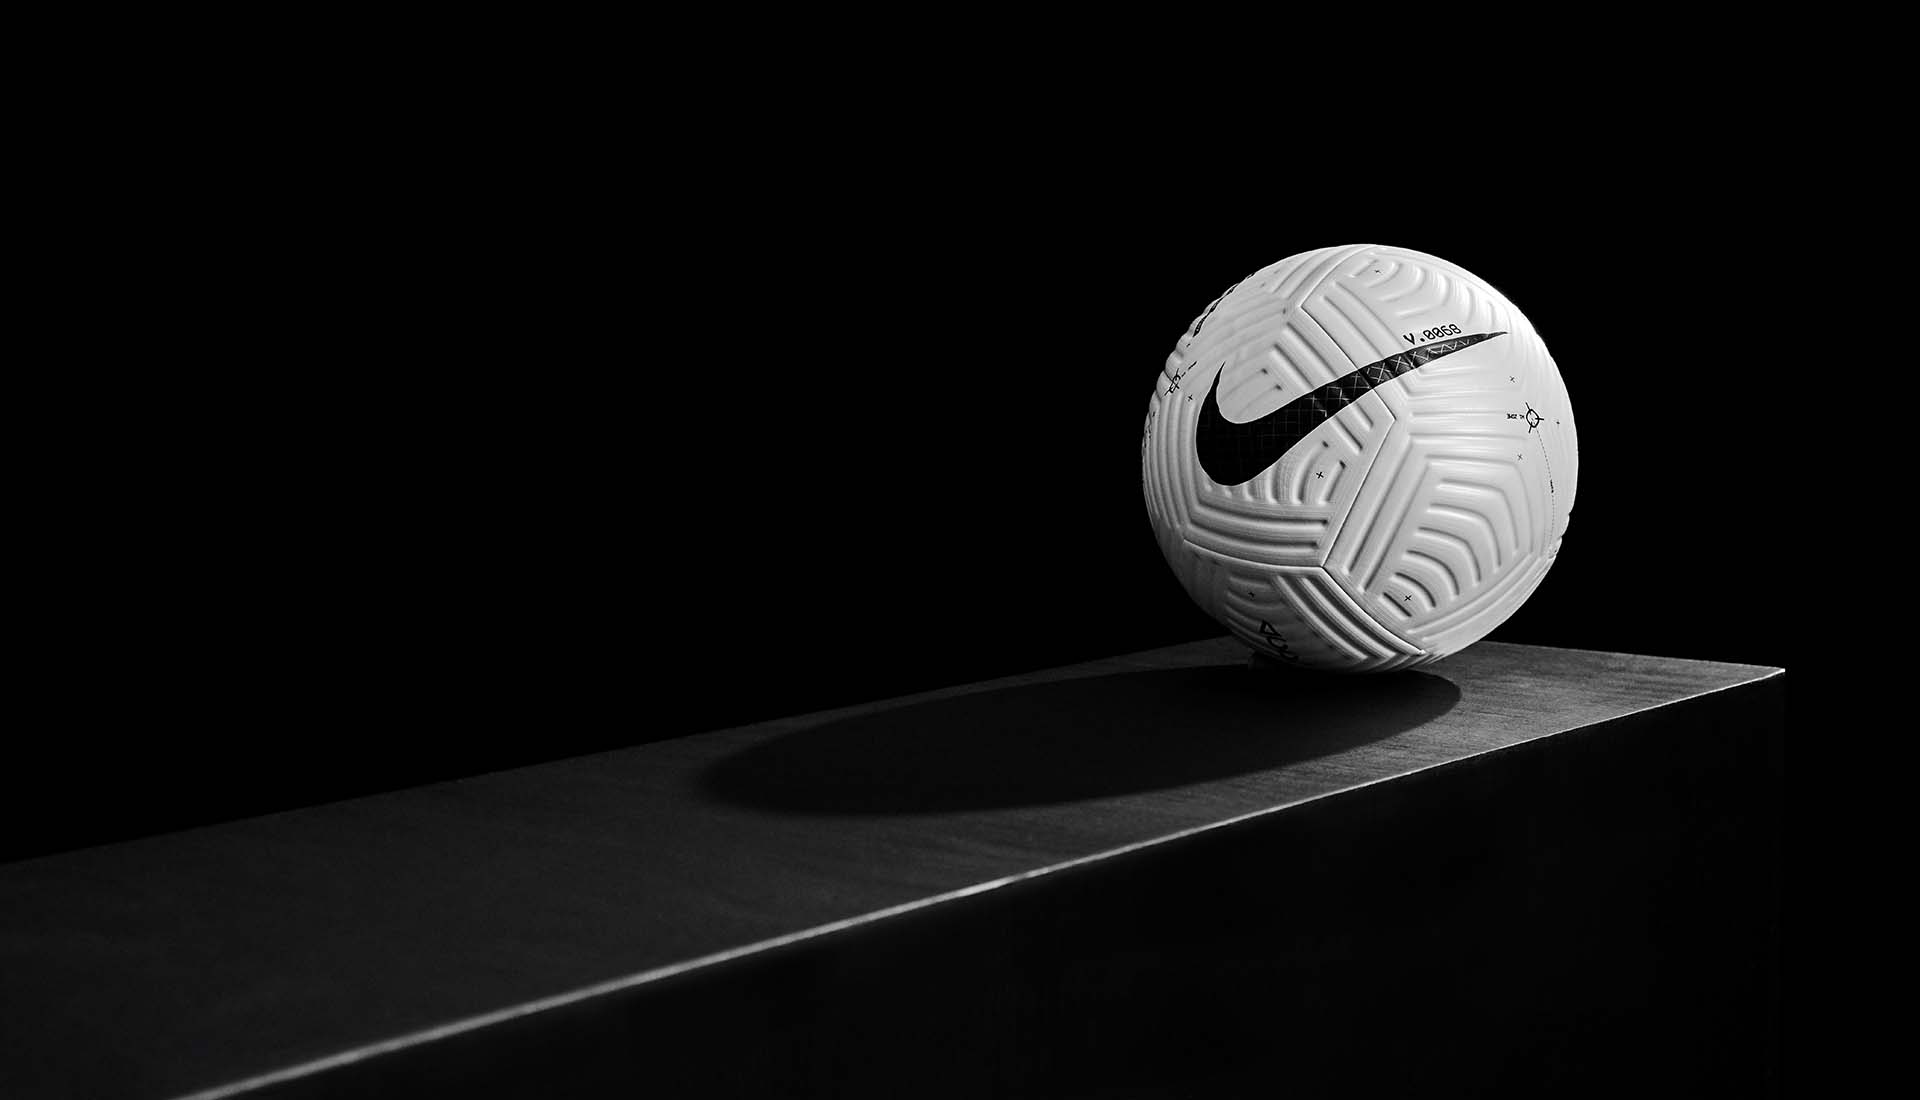 Dropology Episode 01: Nike Flight Ball Feat. Kieran Ronan - SoccerBible